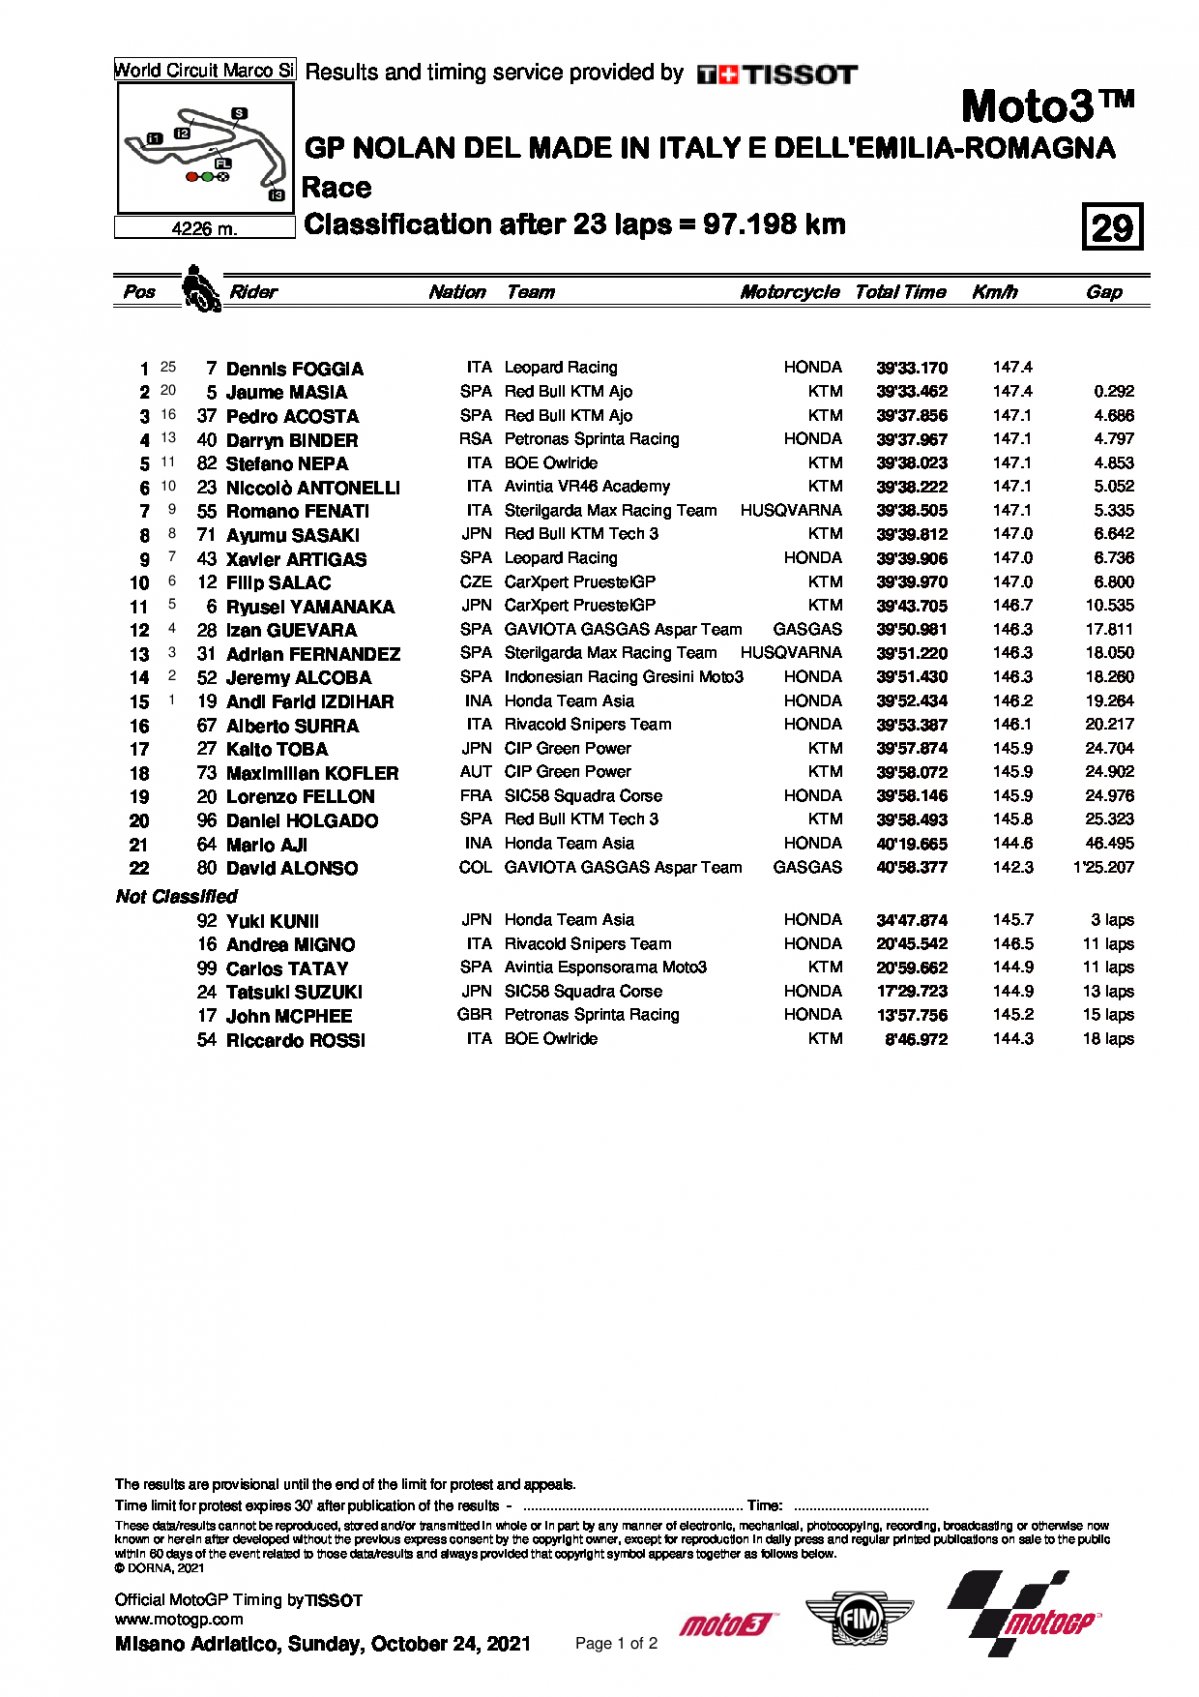 Результаты Гран-При Эмильи-Романьи, Moto3 (24/10/2021)